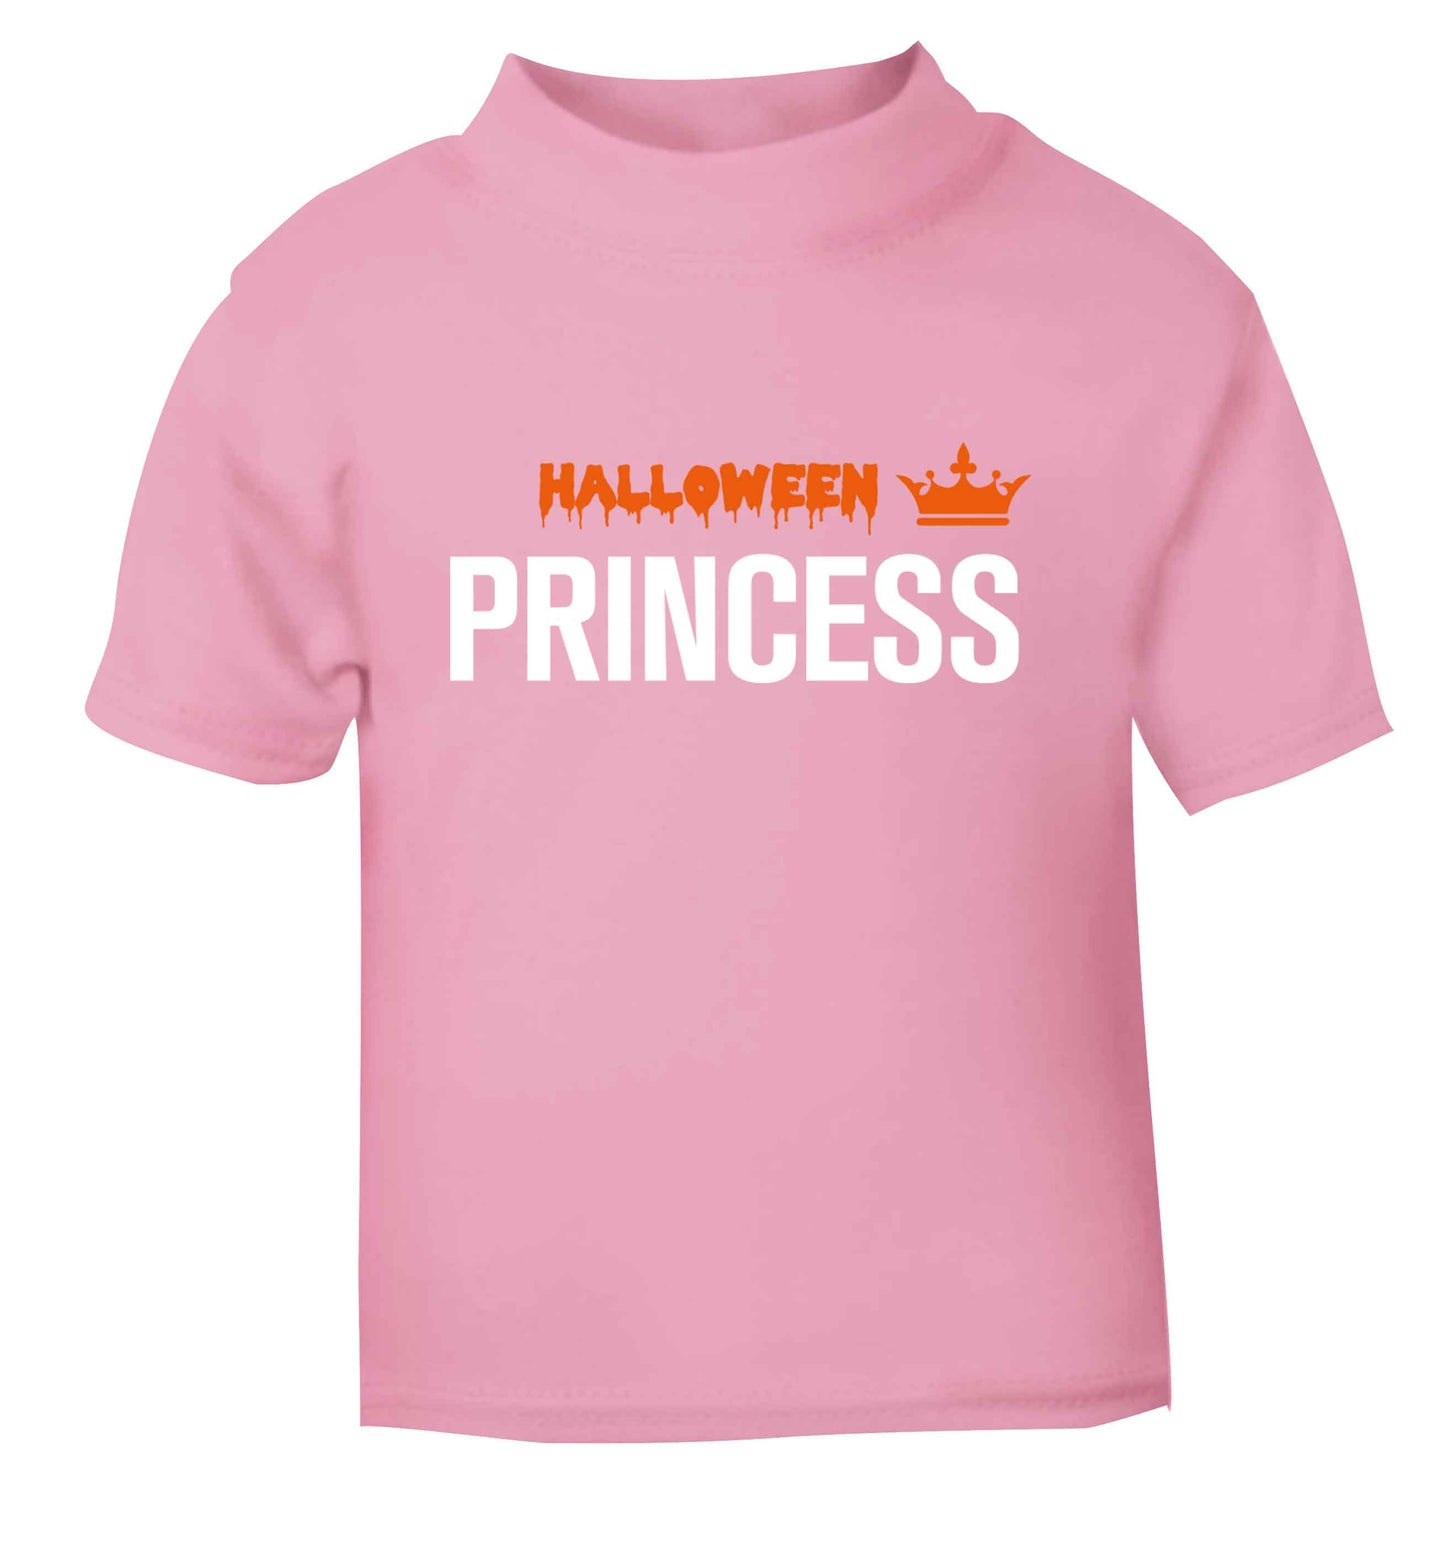 Halloween princess light pink baby toddler Tshirt 2 Years